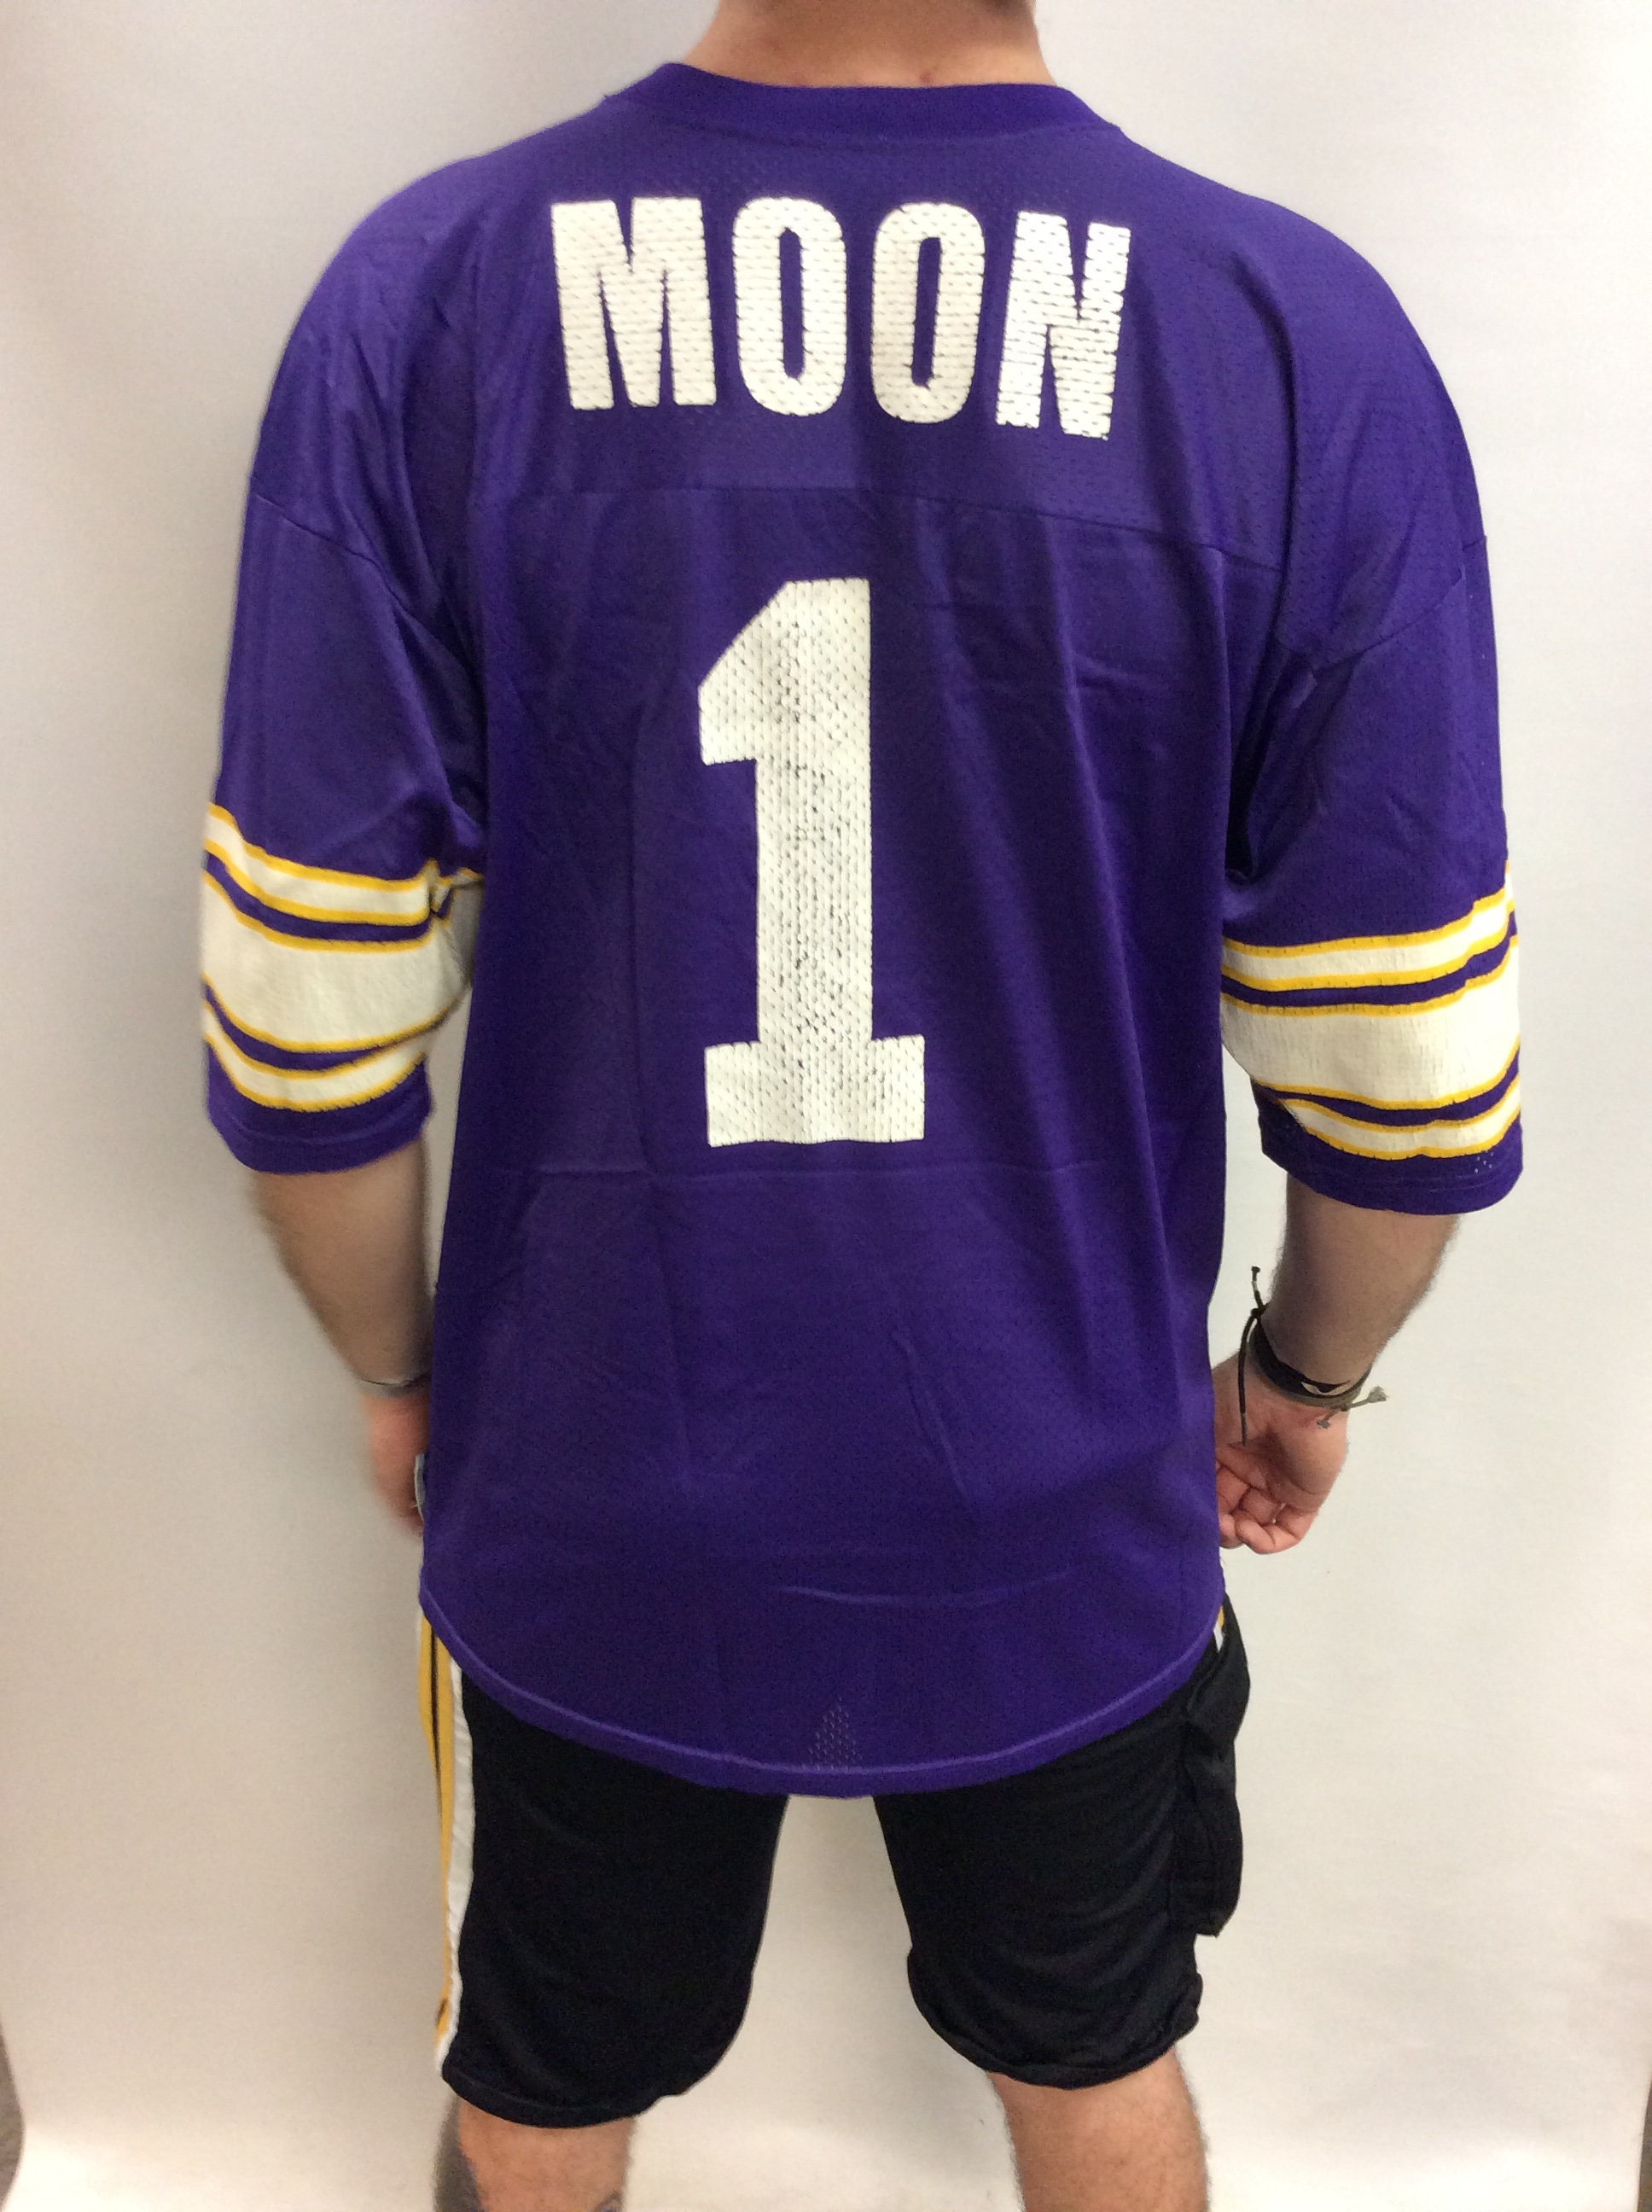 Warren Moon retro jersey